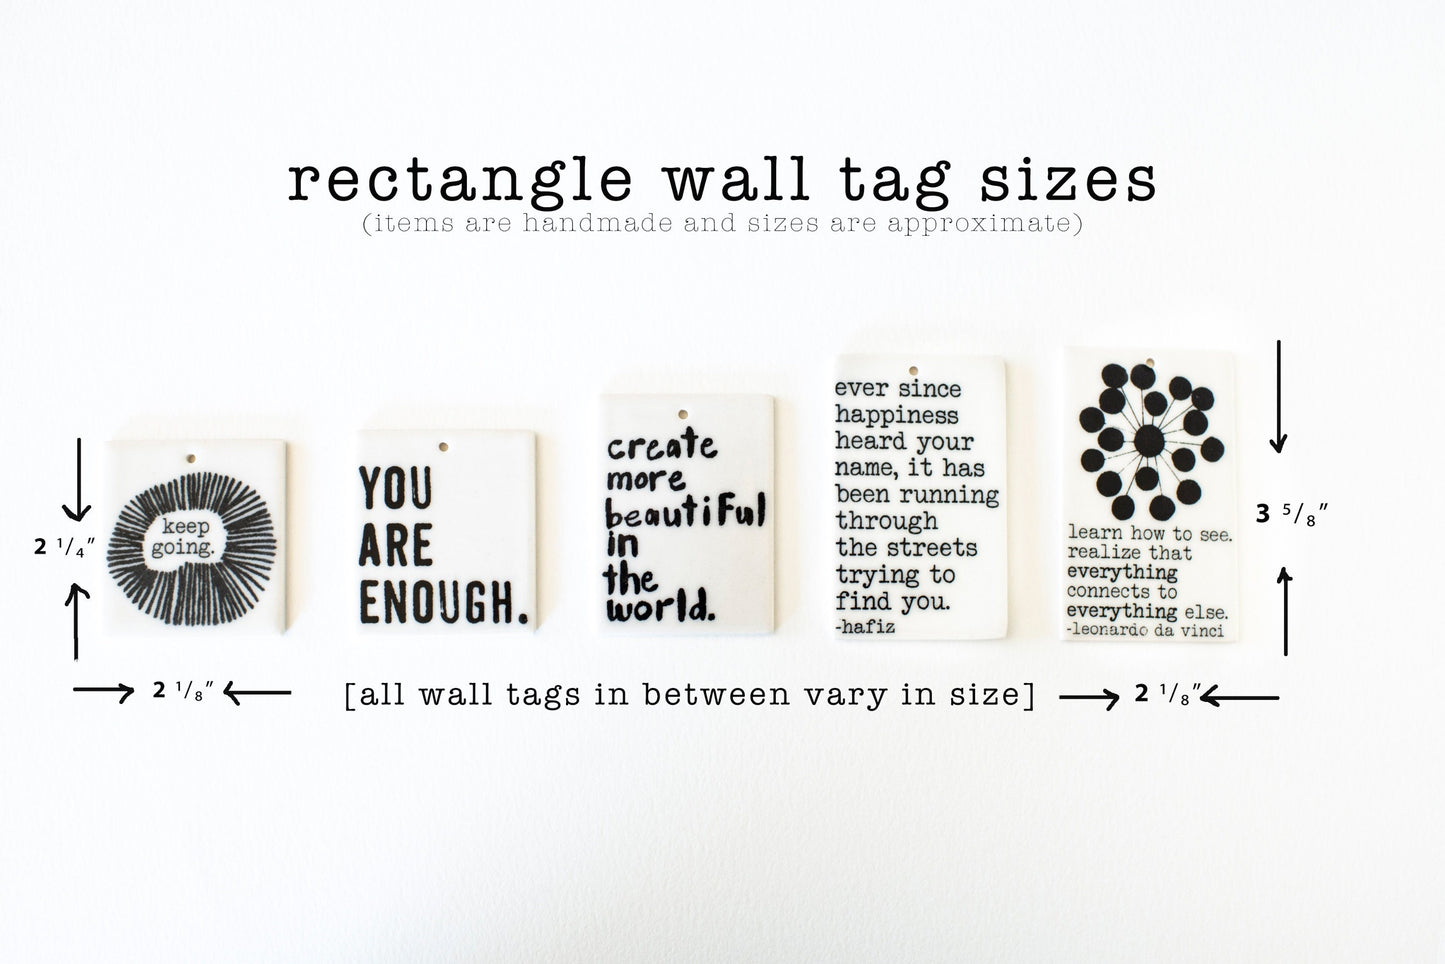 max muller quote ceramic wall tag